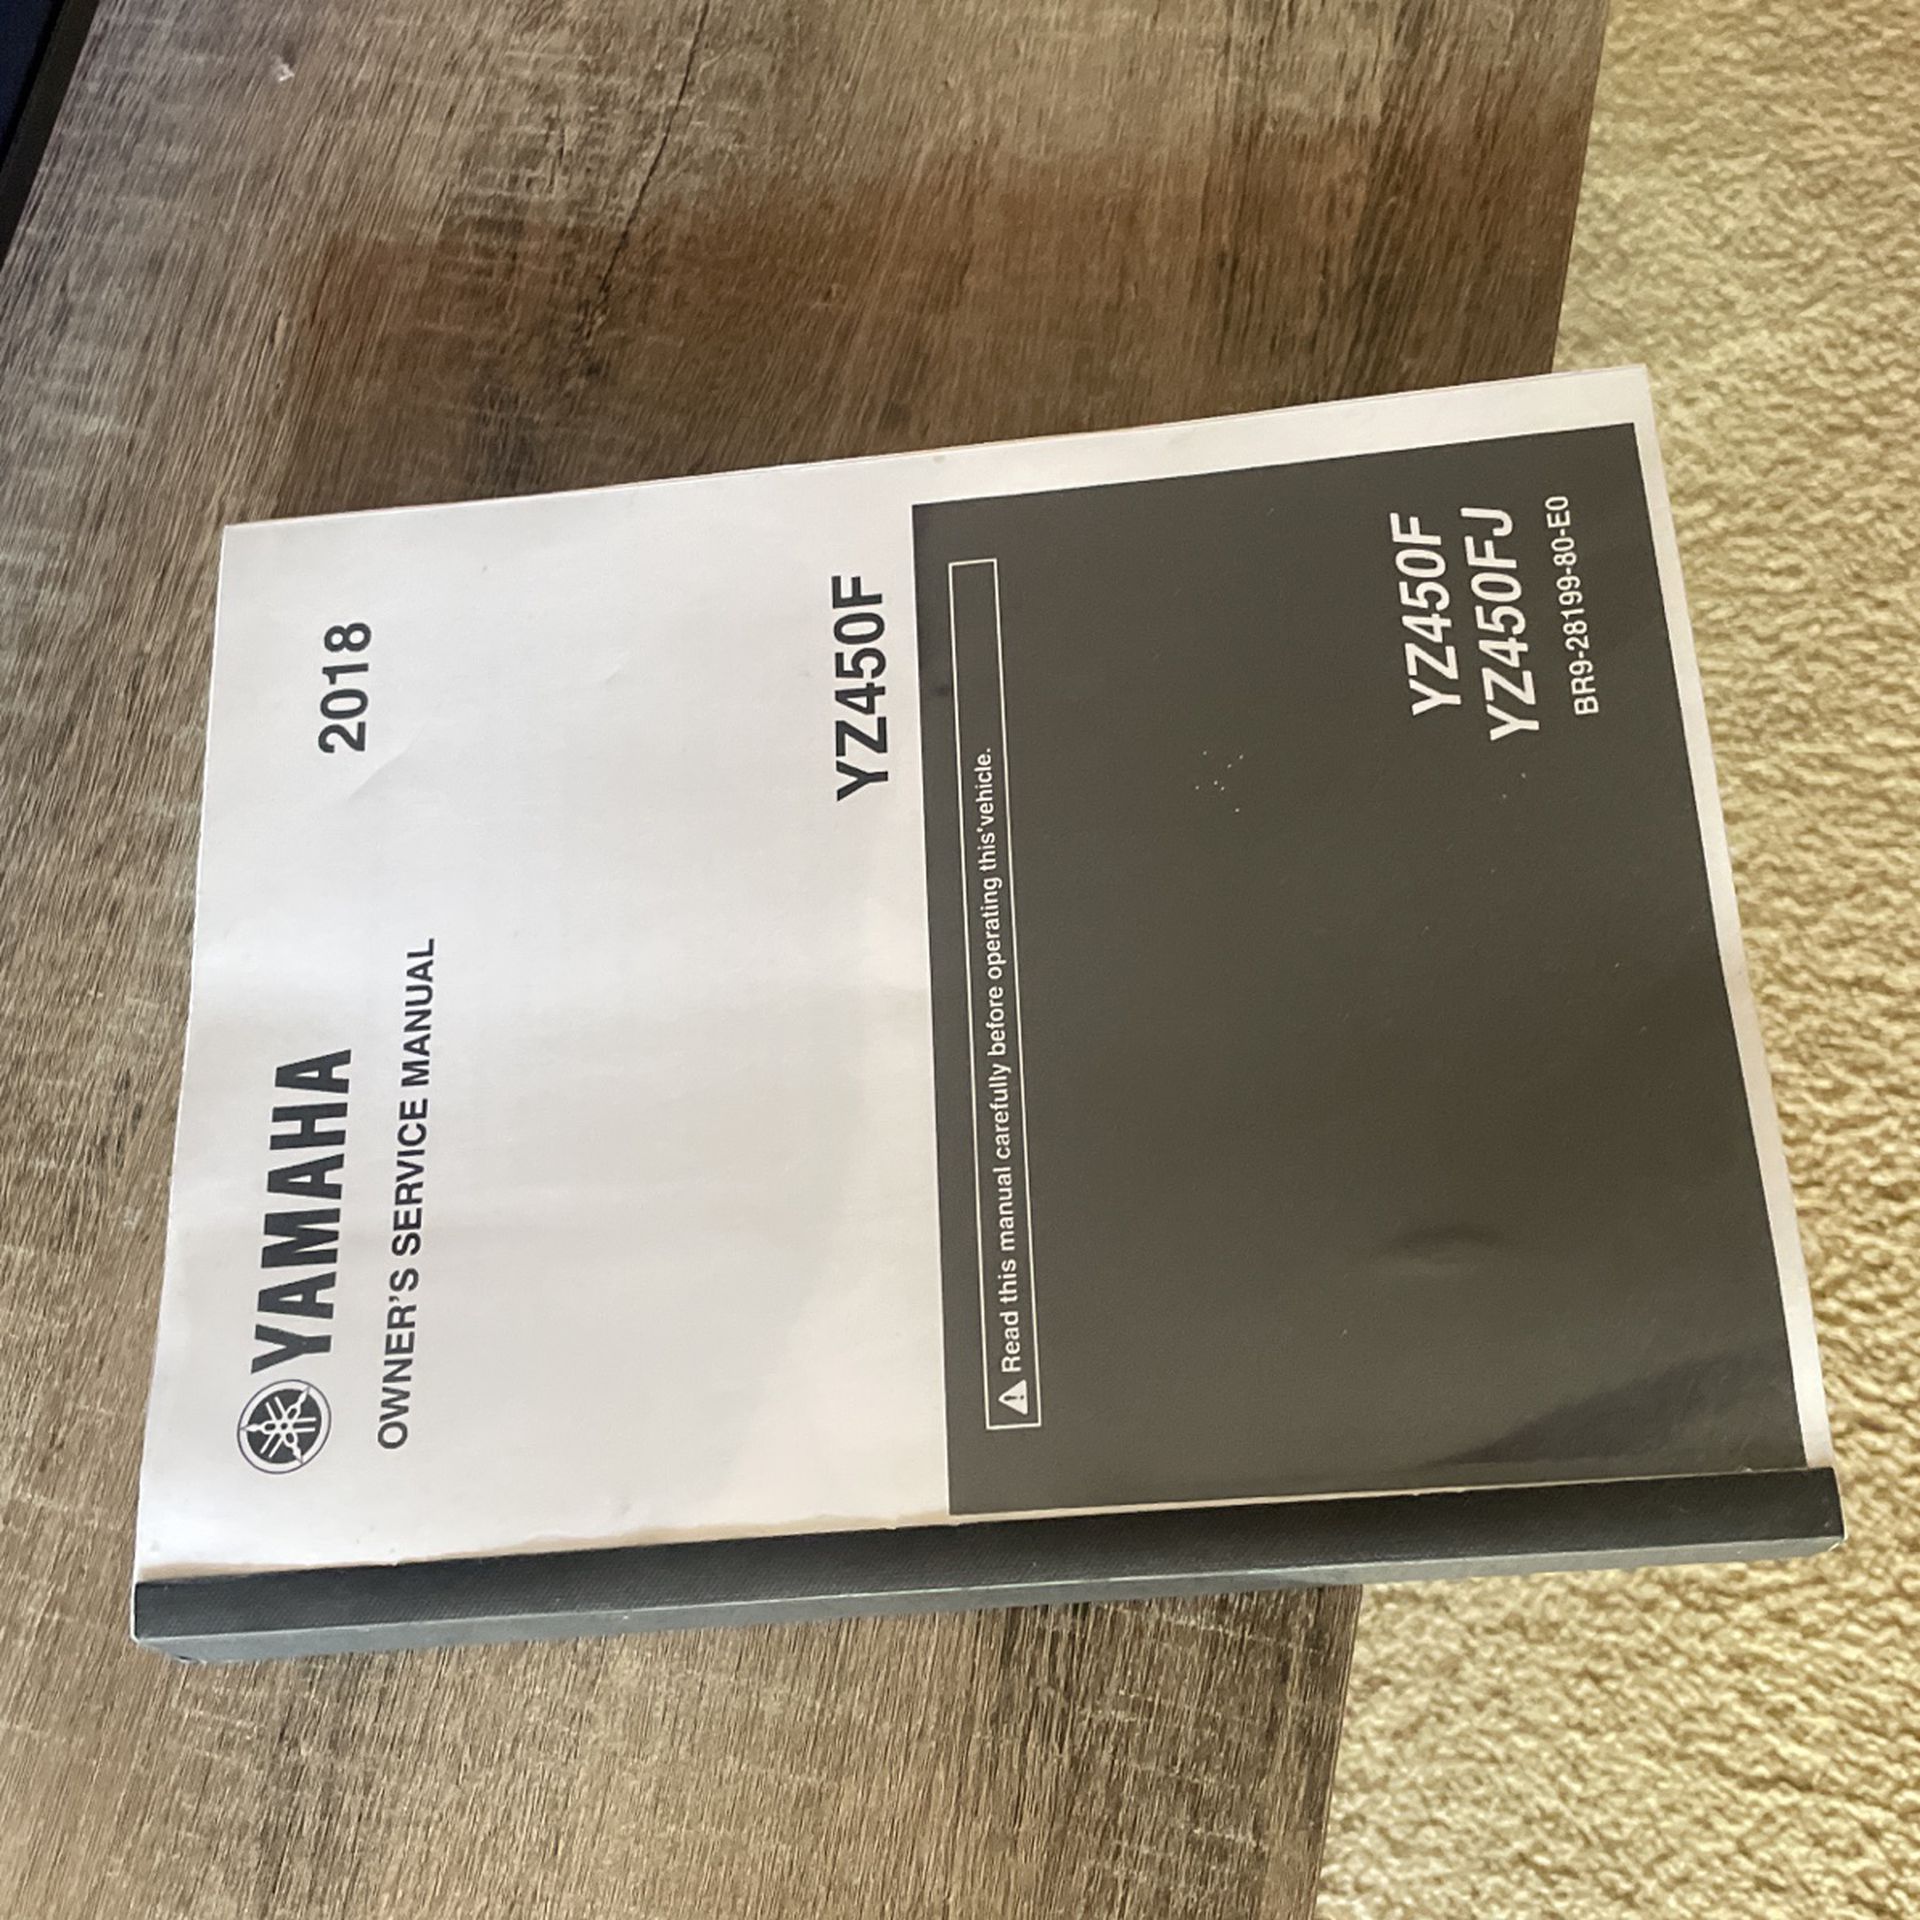 2018 Yz450f Service Manual